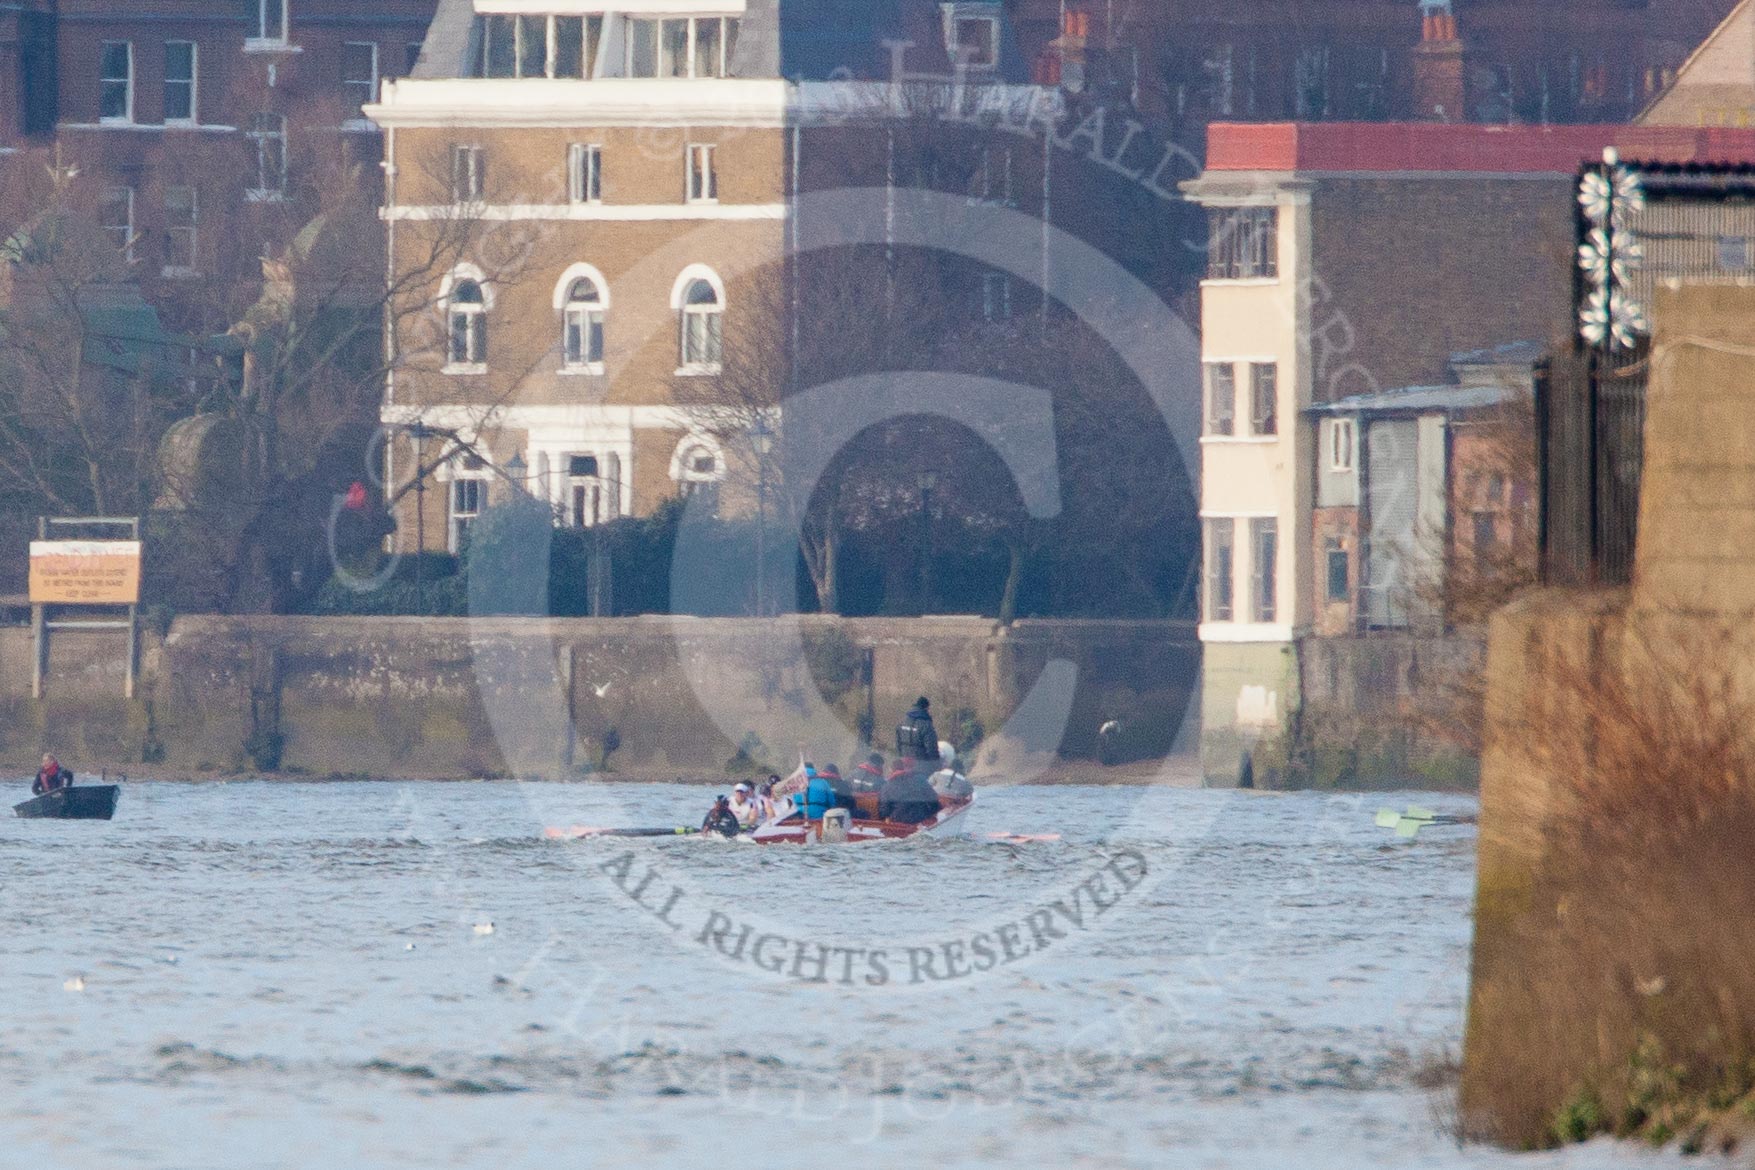 The Boat Race season 2013 - fixture CUBC vs Leander.
River Thames Tideway between Putney Bridge and Mortlake,
London SW15,

United Kingdom,
on 02 March 2013 at 16:02, image #184